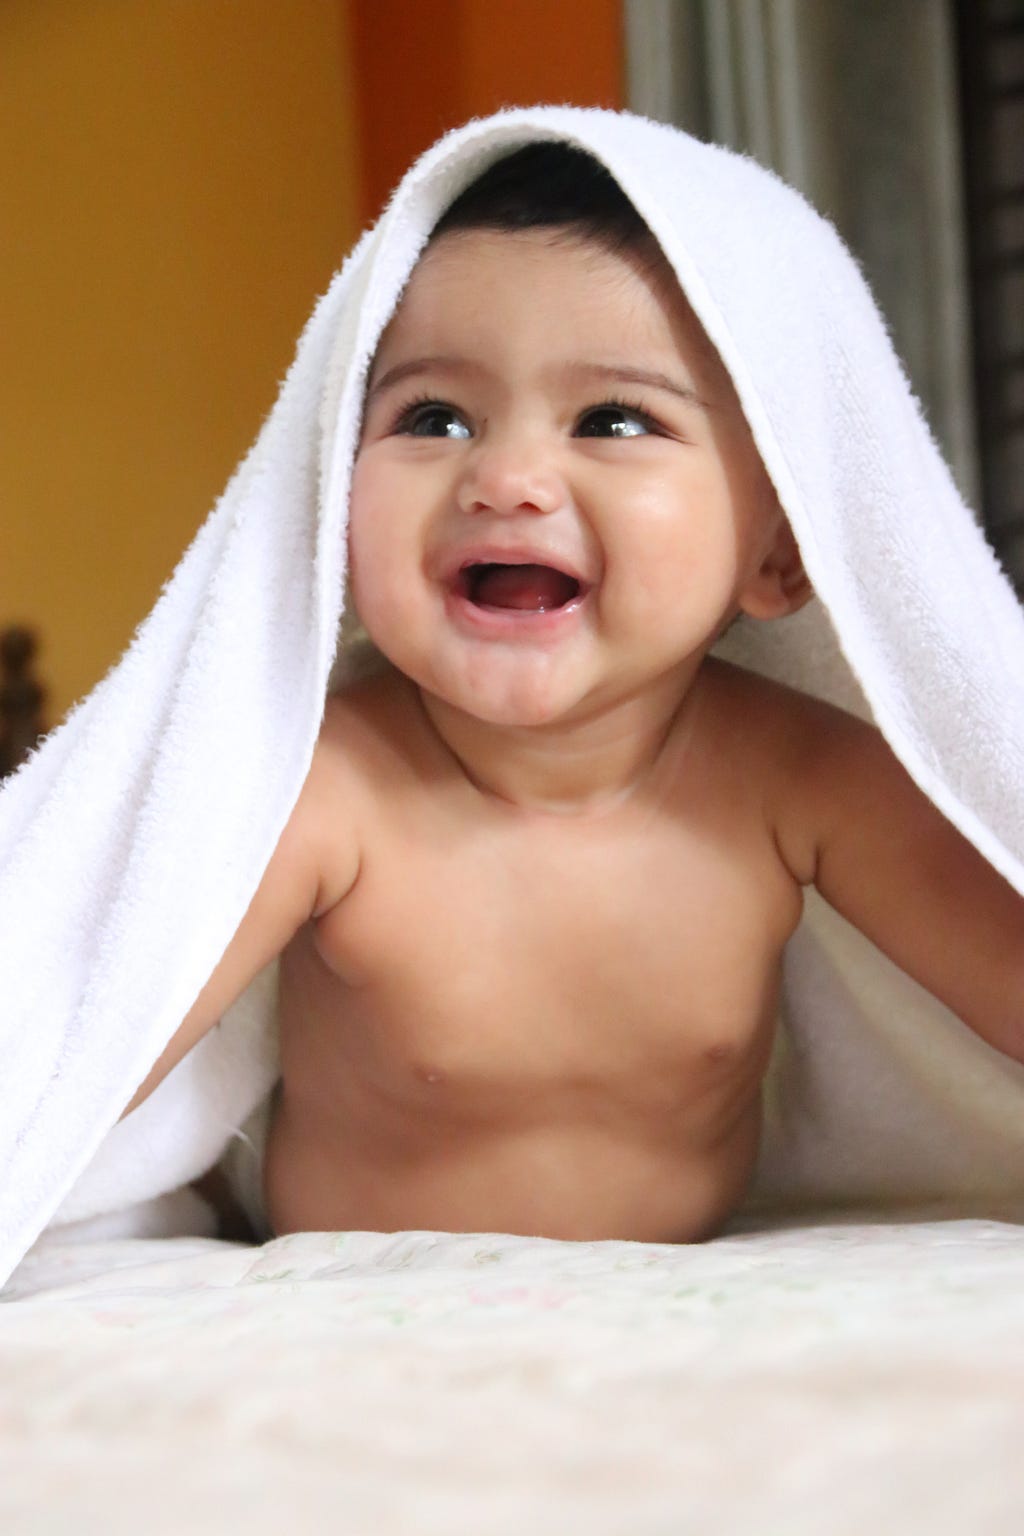 smiling cute baby under towel